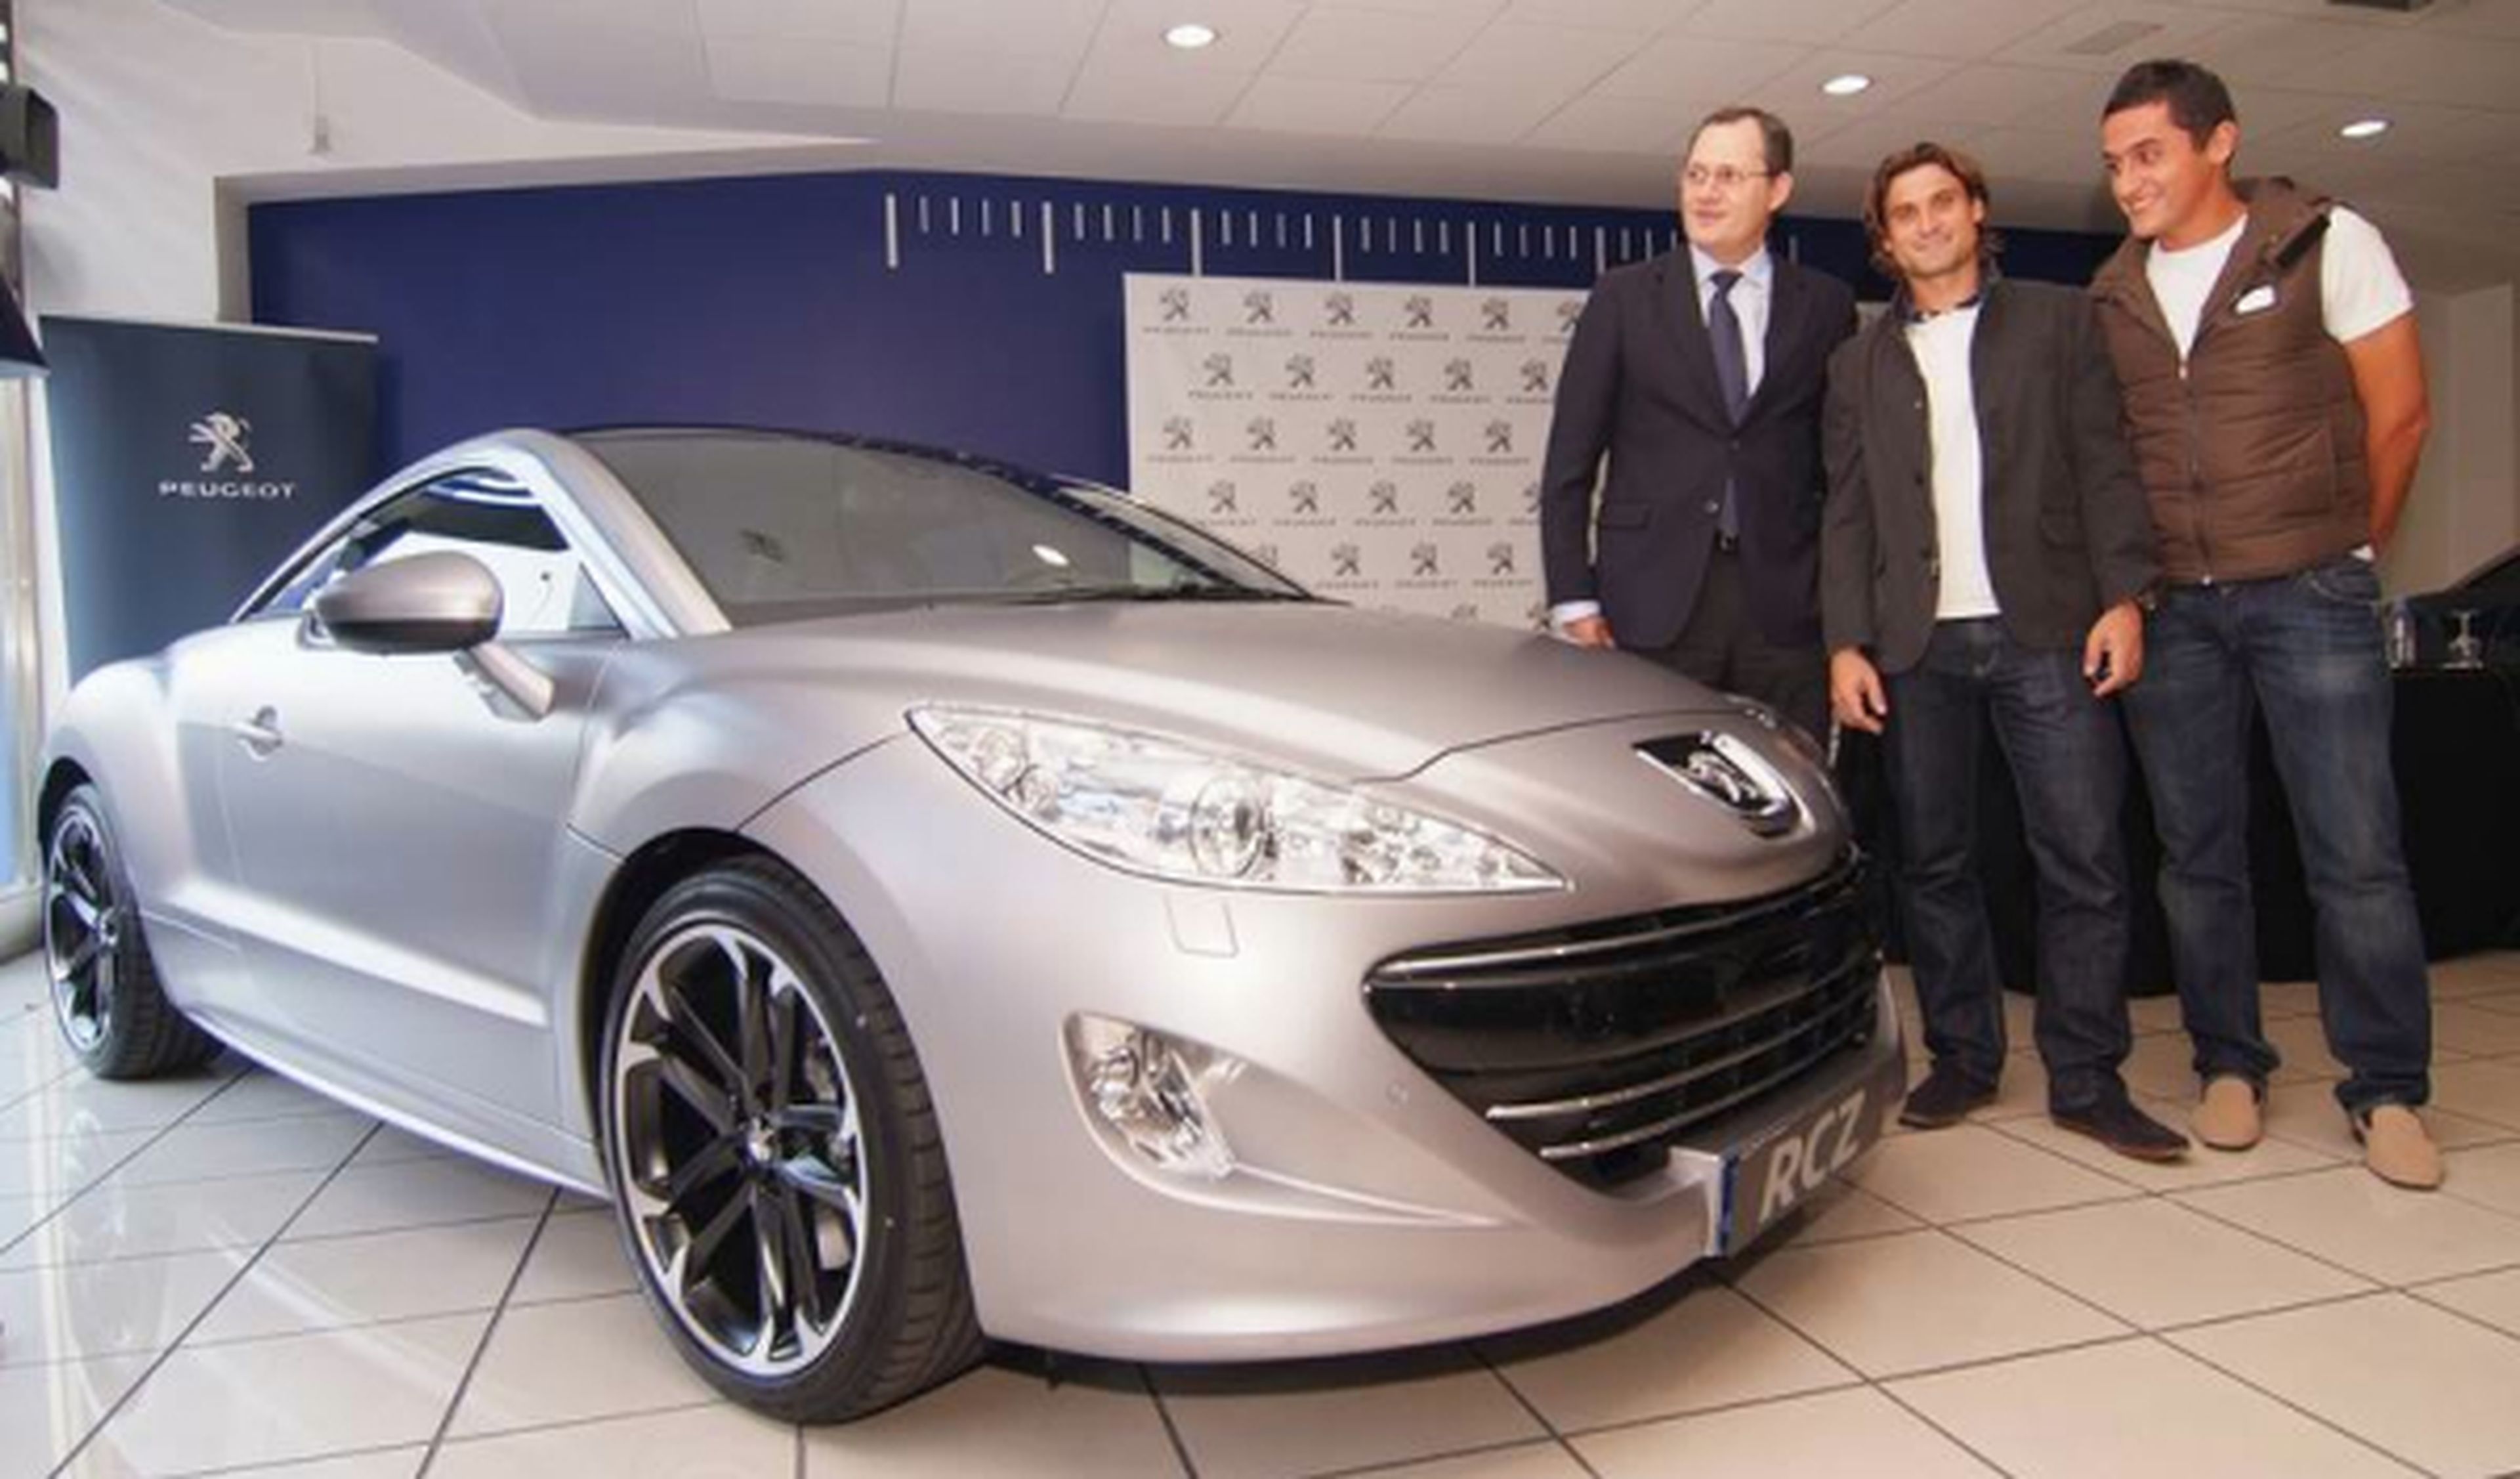 Ferrer, Almagro y el Peugeot RCZ